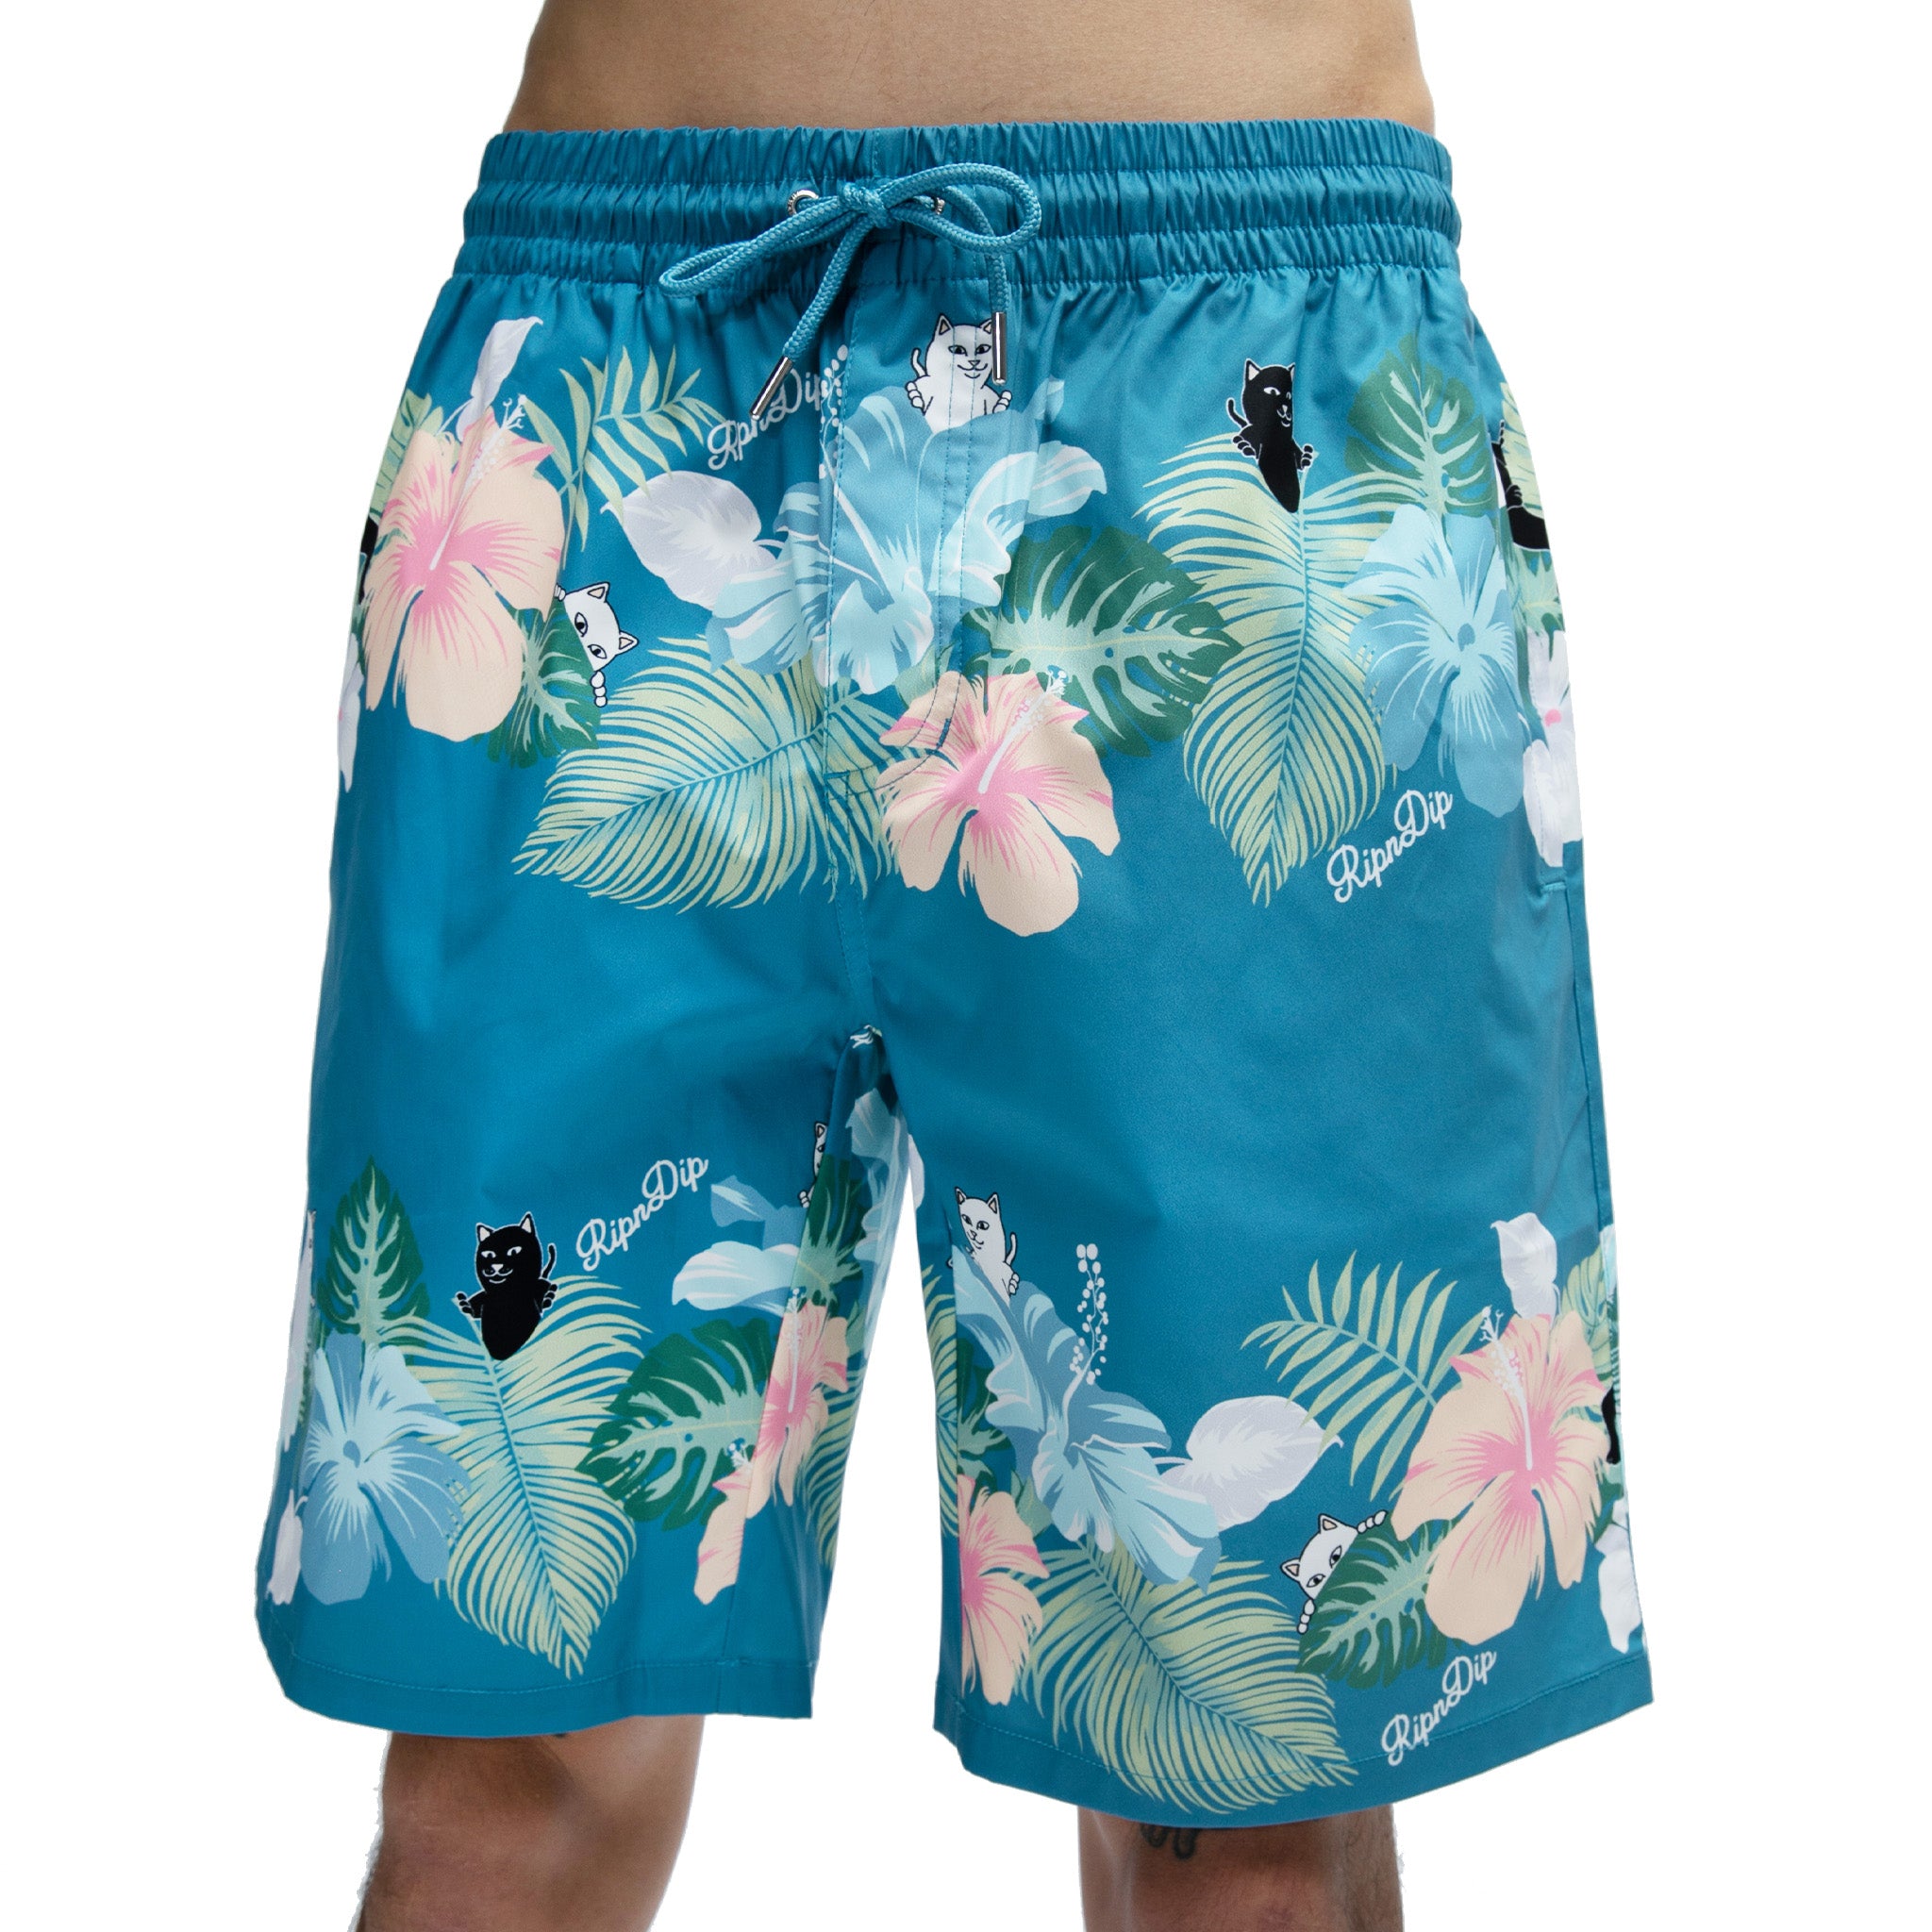 Pablo Swim Shorts (Misty Blue)